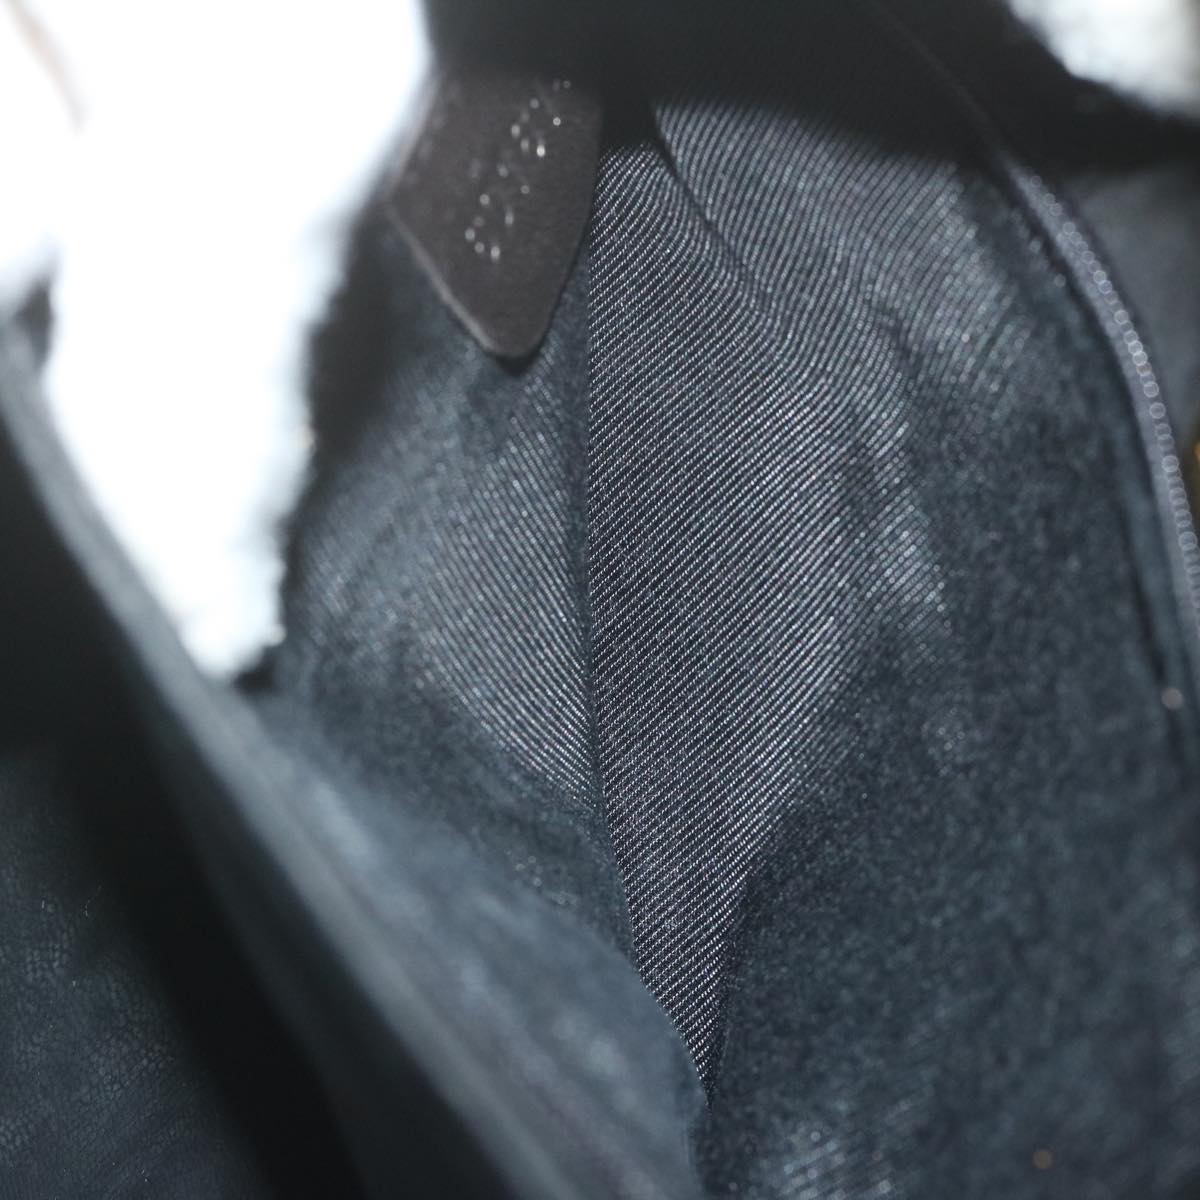 BALLY INTRECCIATO Hand Bag Leather 2way Black Auth ac2558